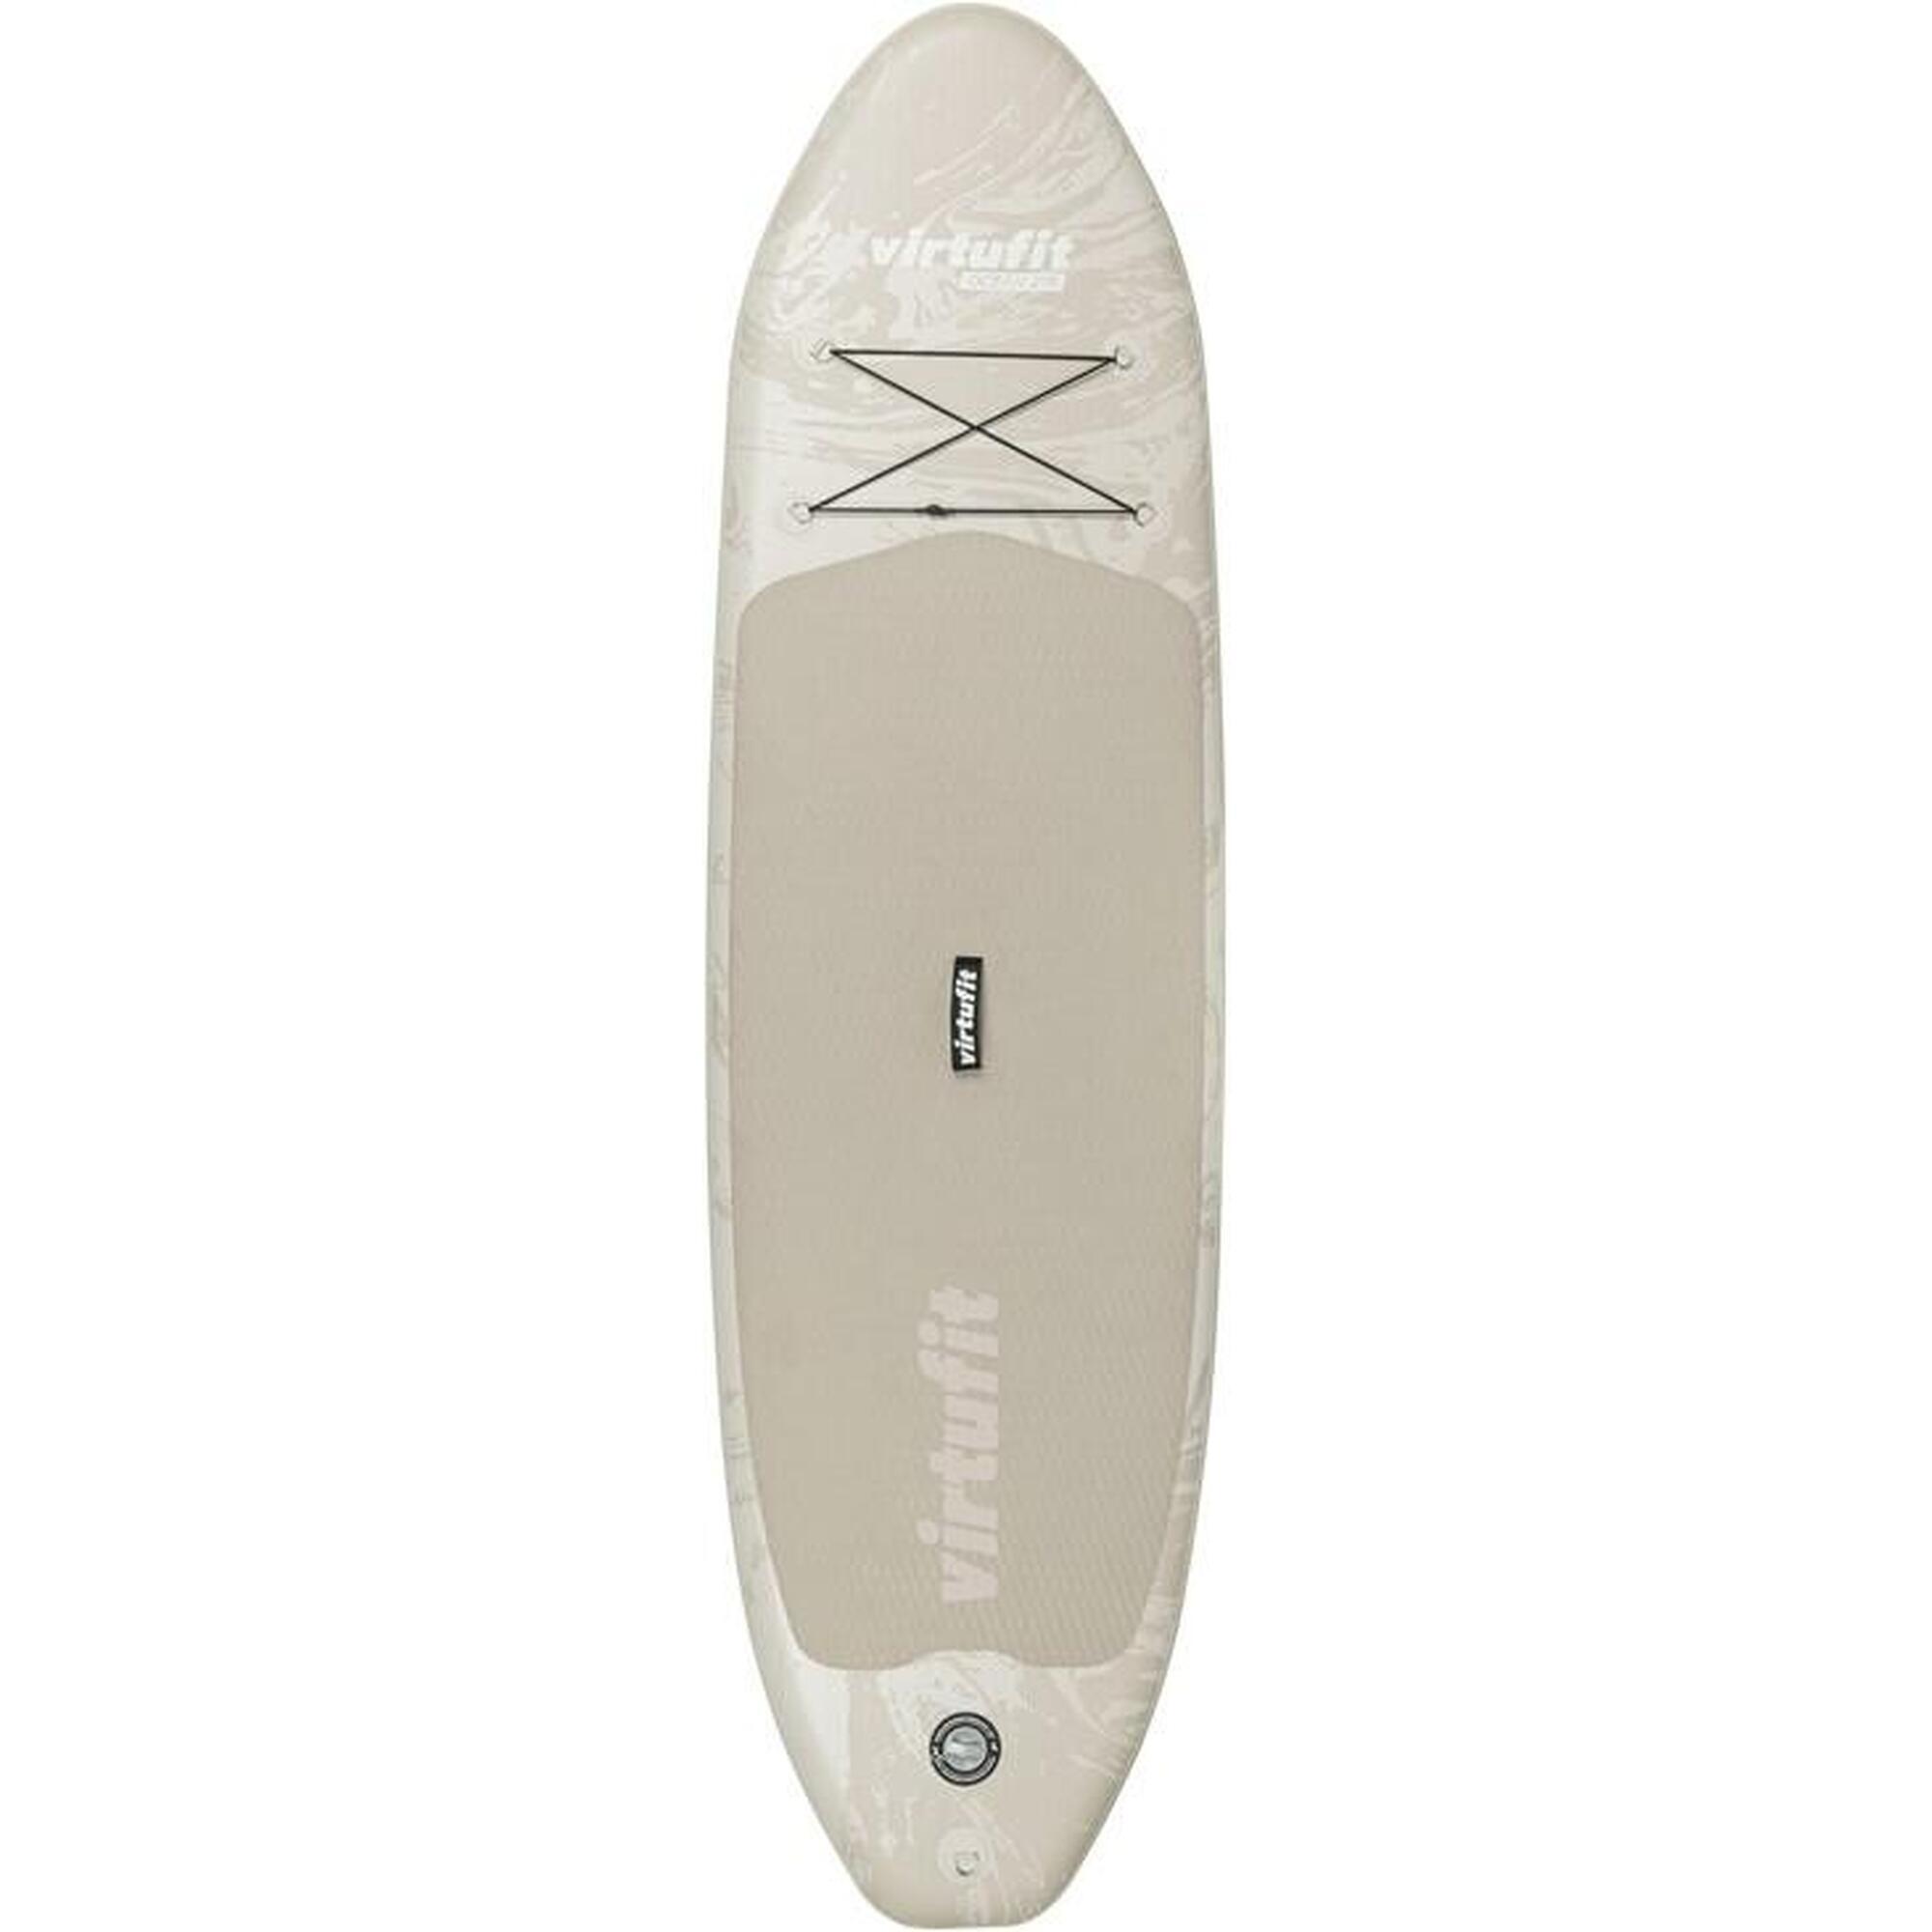 Supboard Ocean 275 - Beige - Met accessoires en draagtas